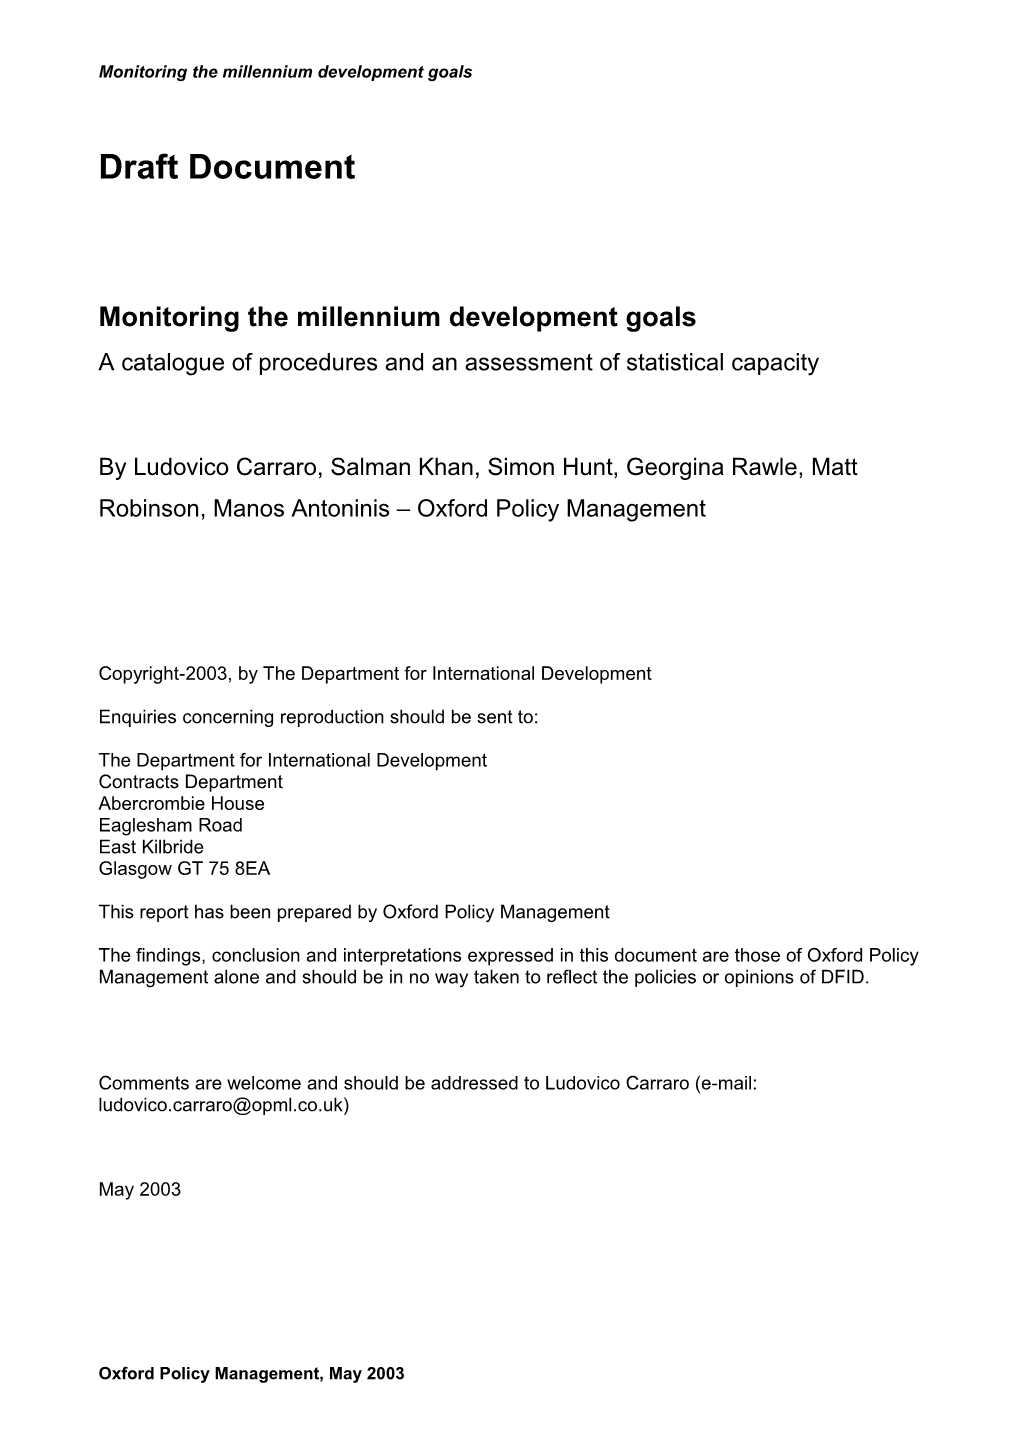 Monitoring the Millennium Development Goals